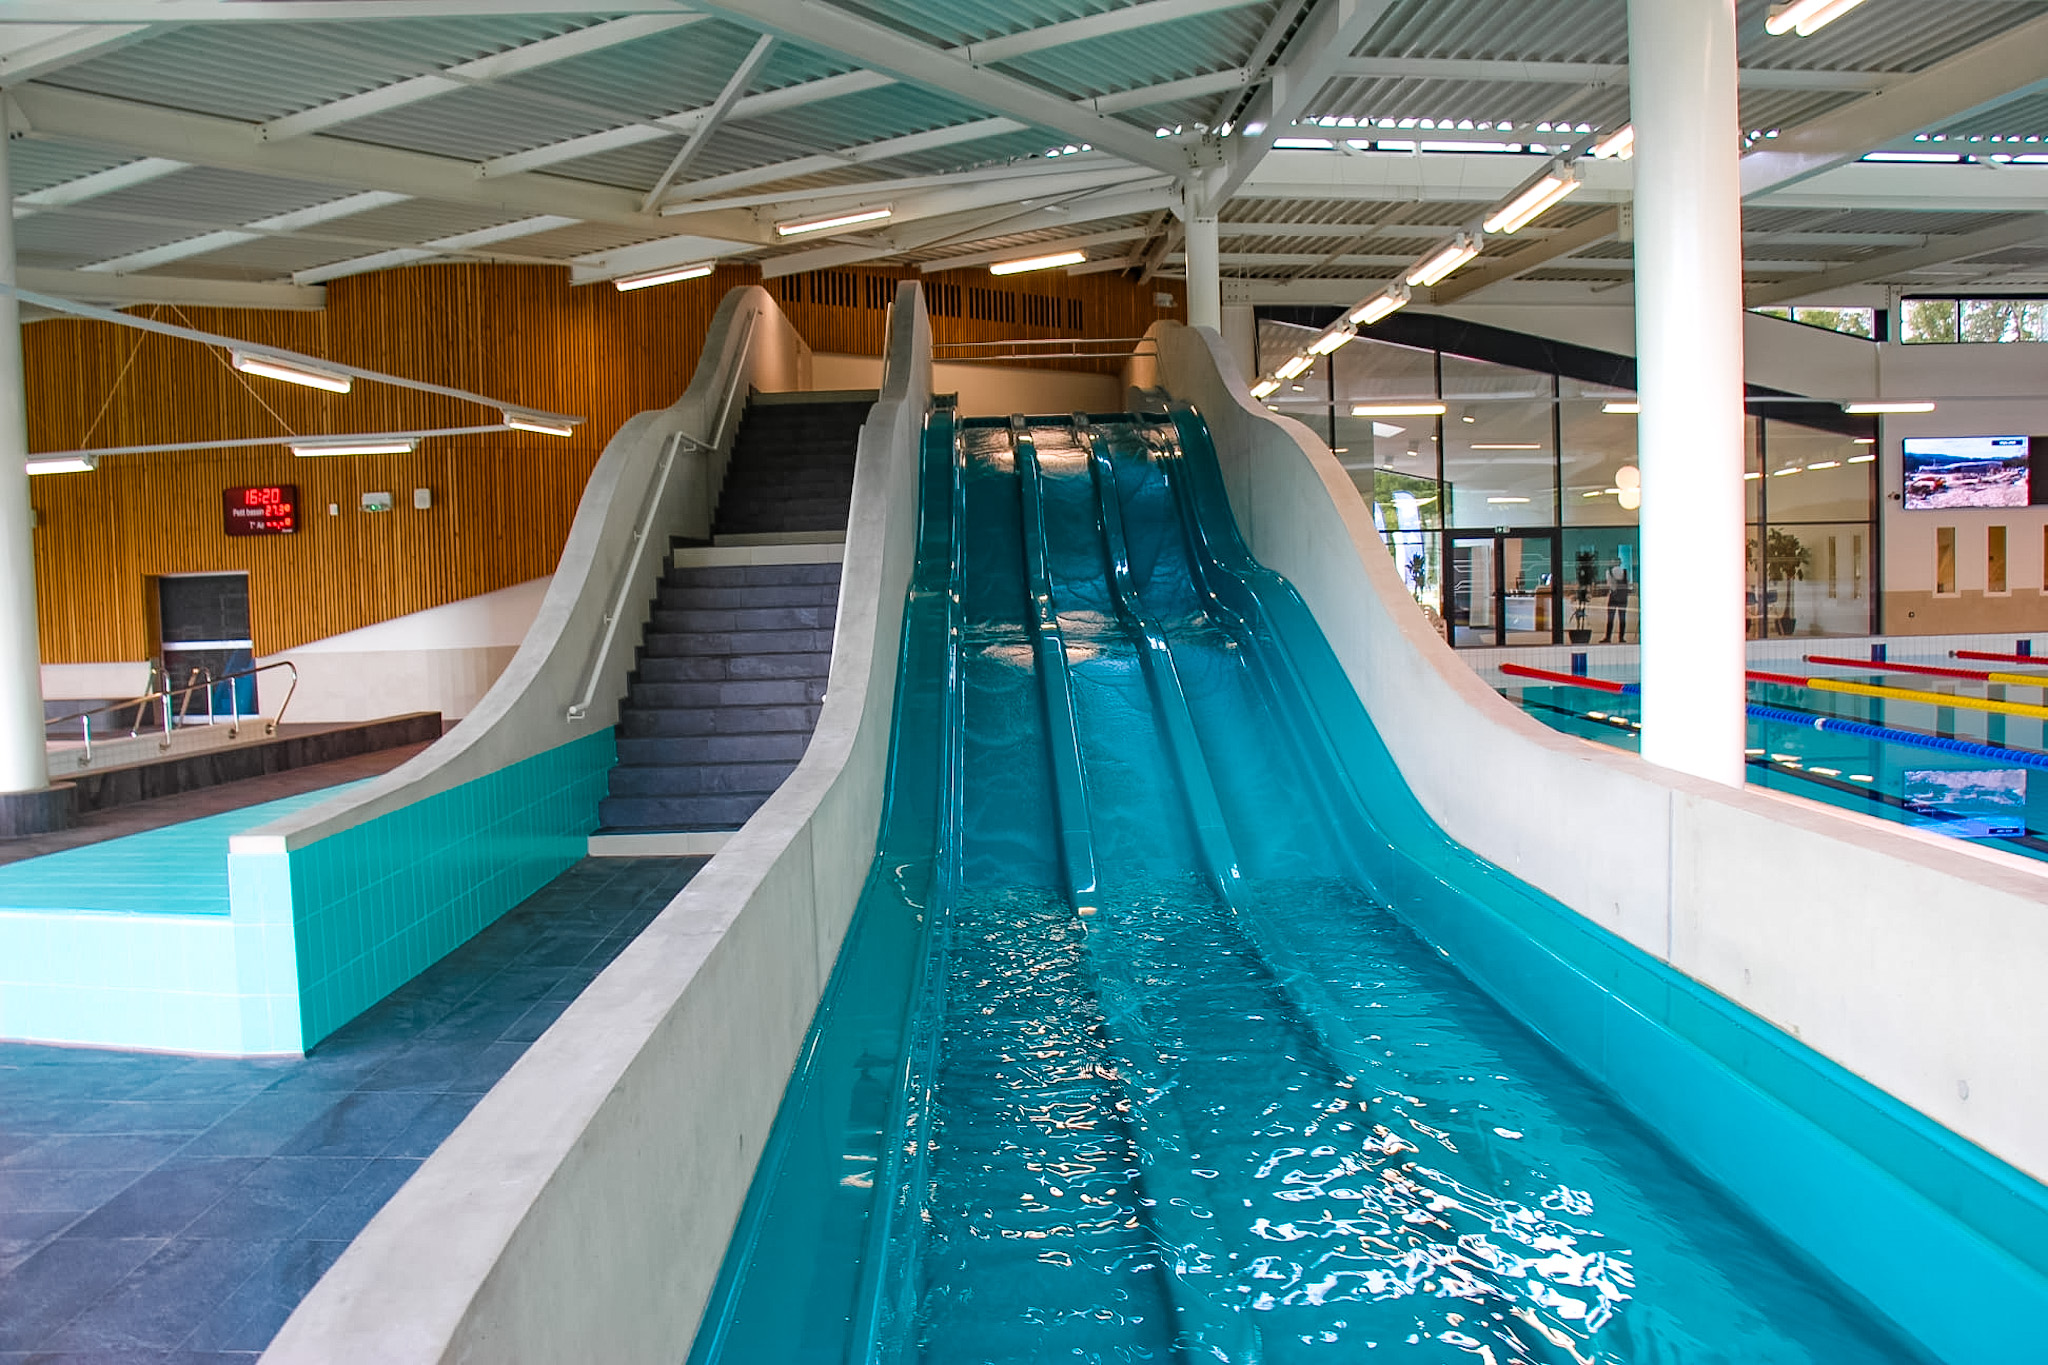 Centre Aquatique Natureo Côte d'Opale activité piscine sauna hammam toboggan